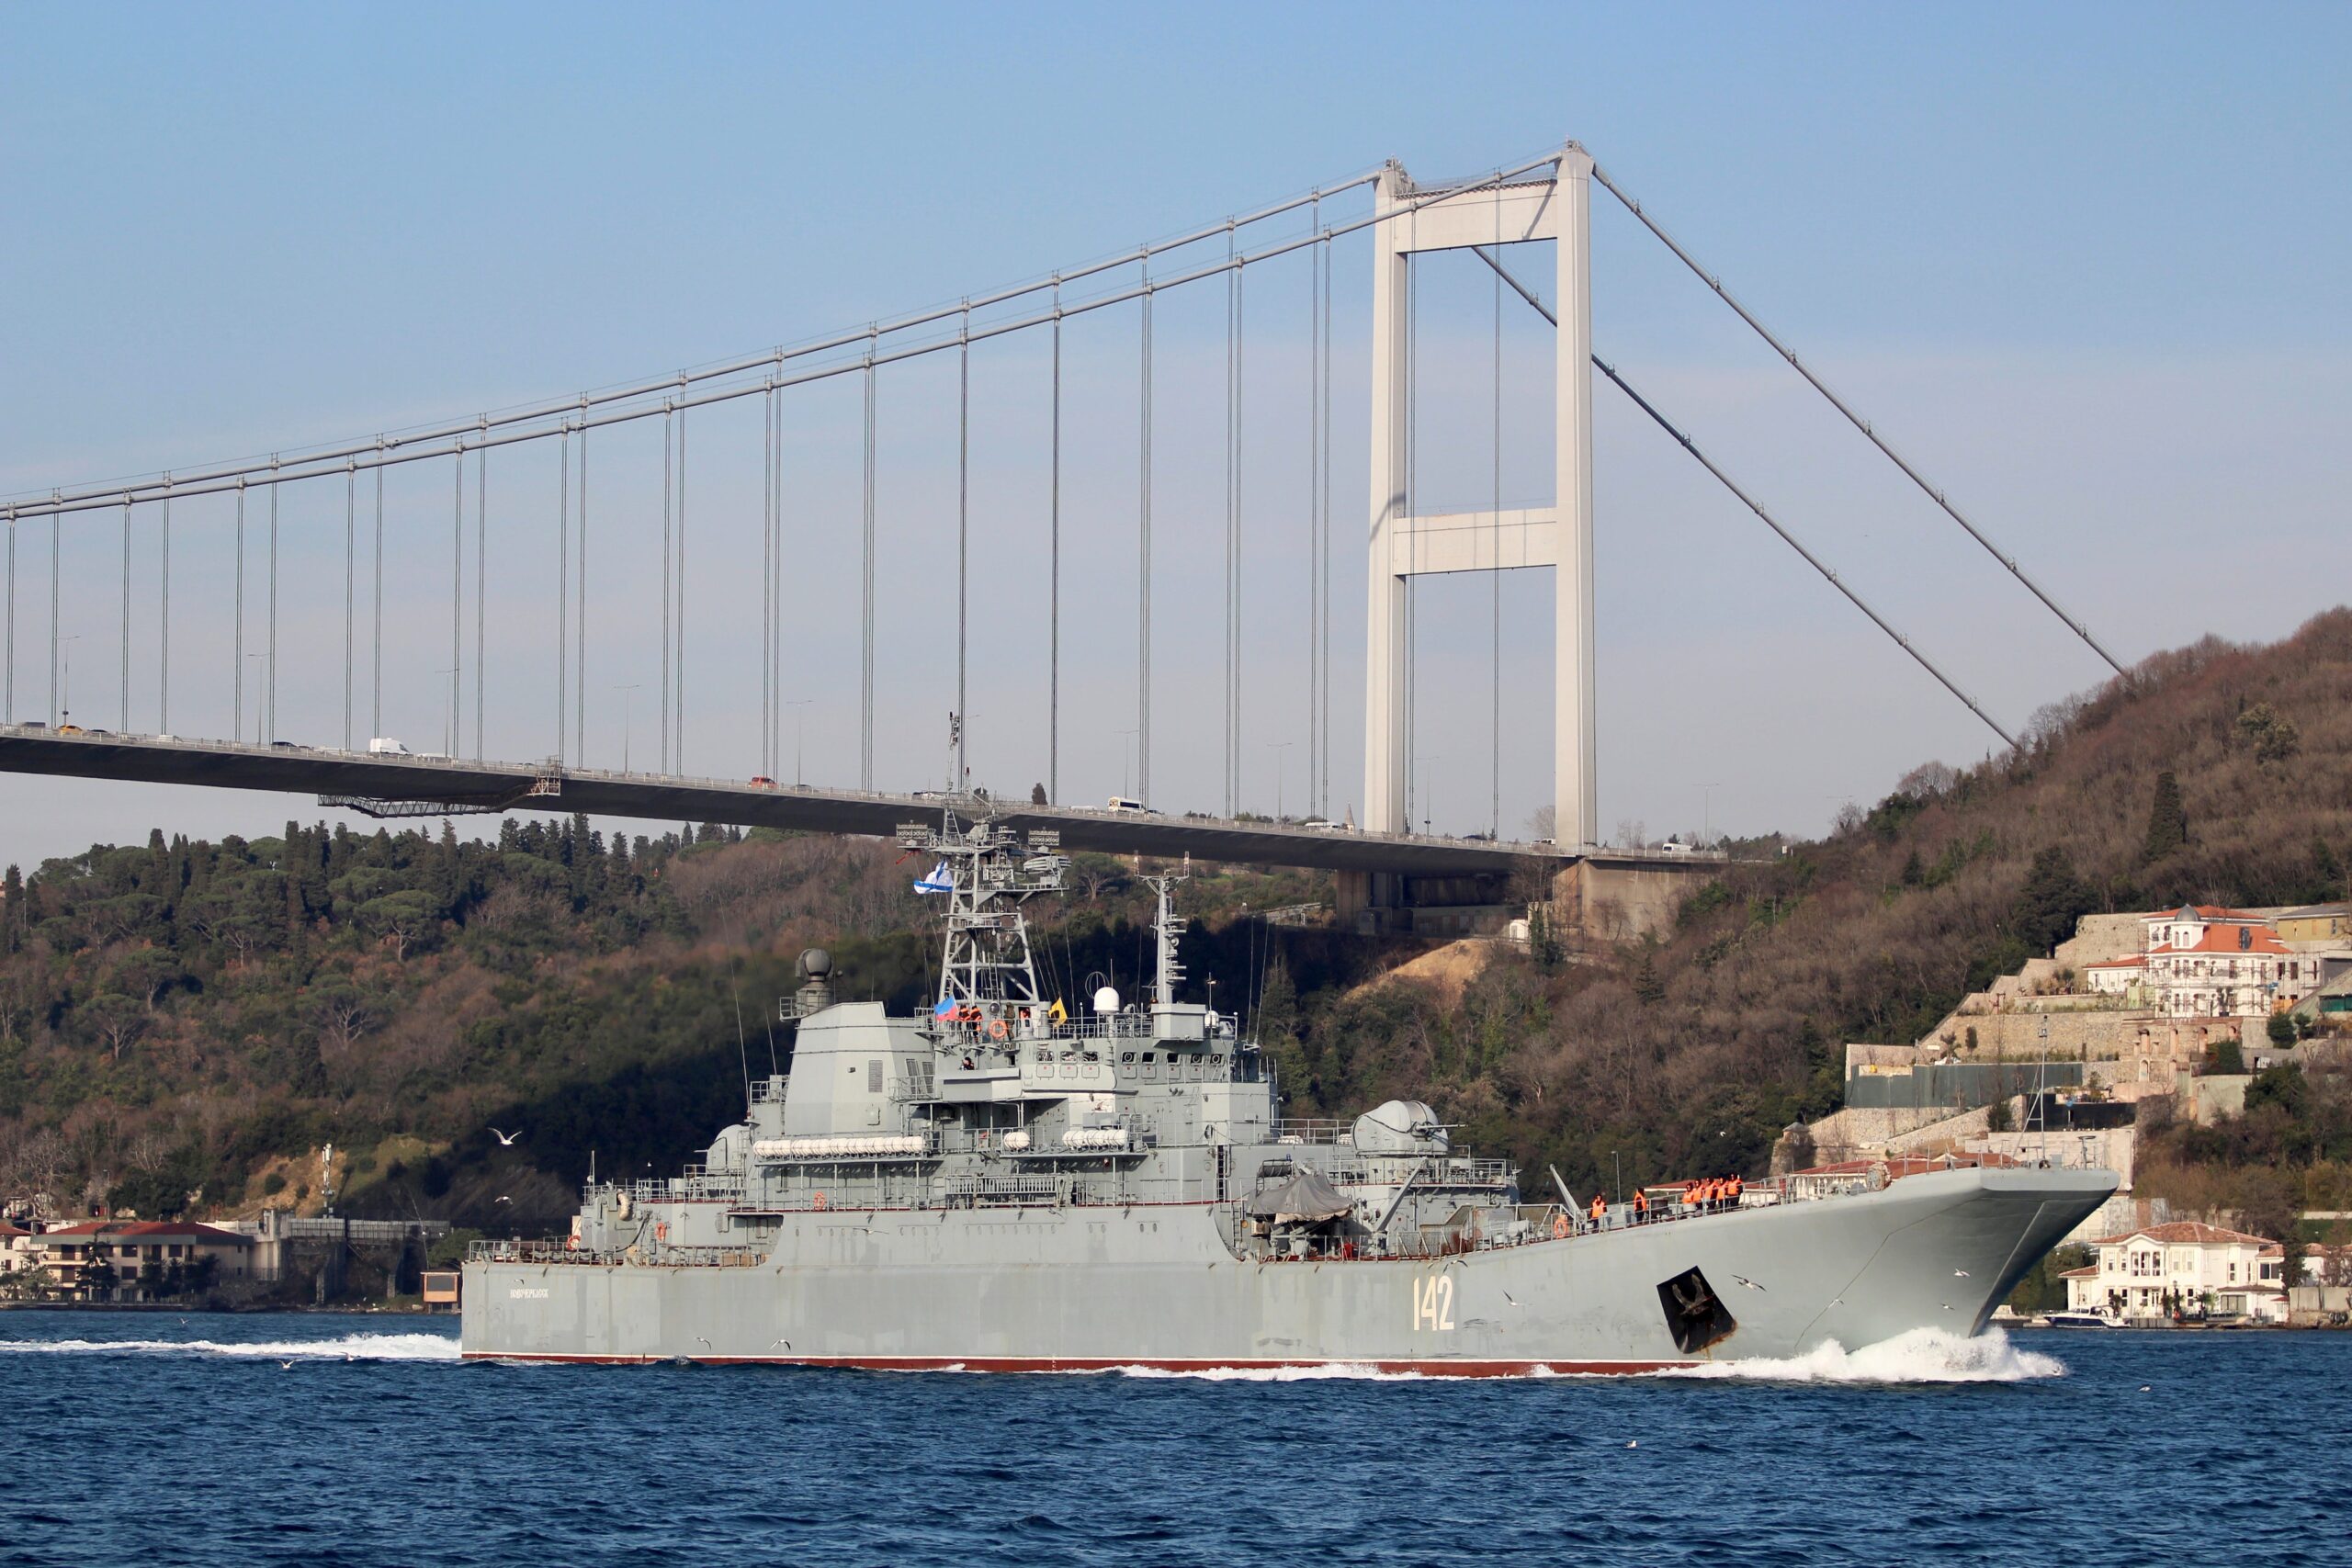 The Russian Navy's large landing ship Novocherkassk